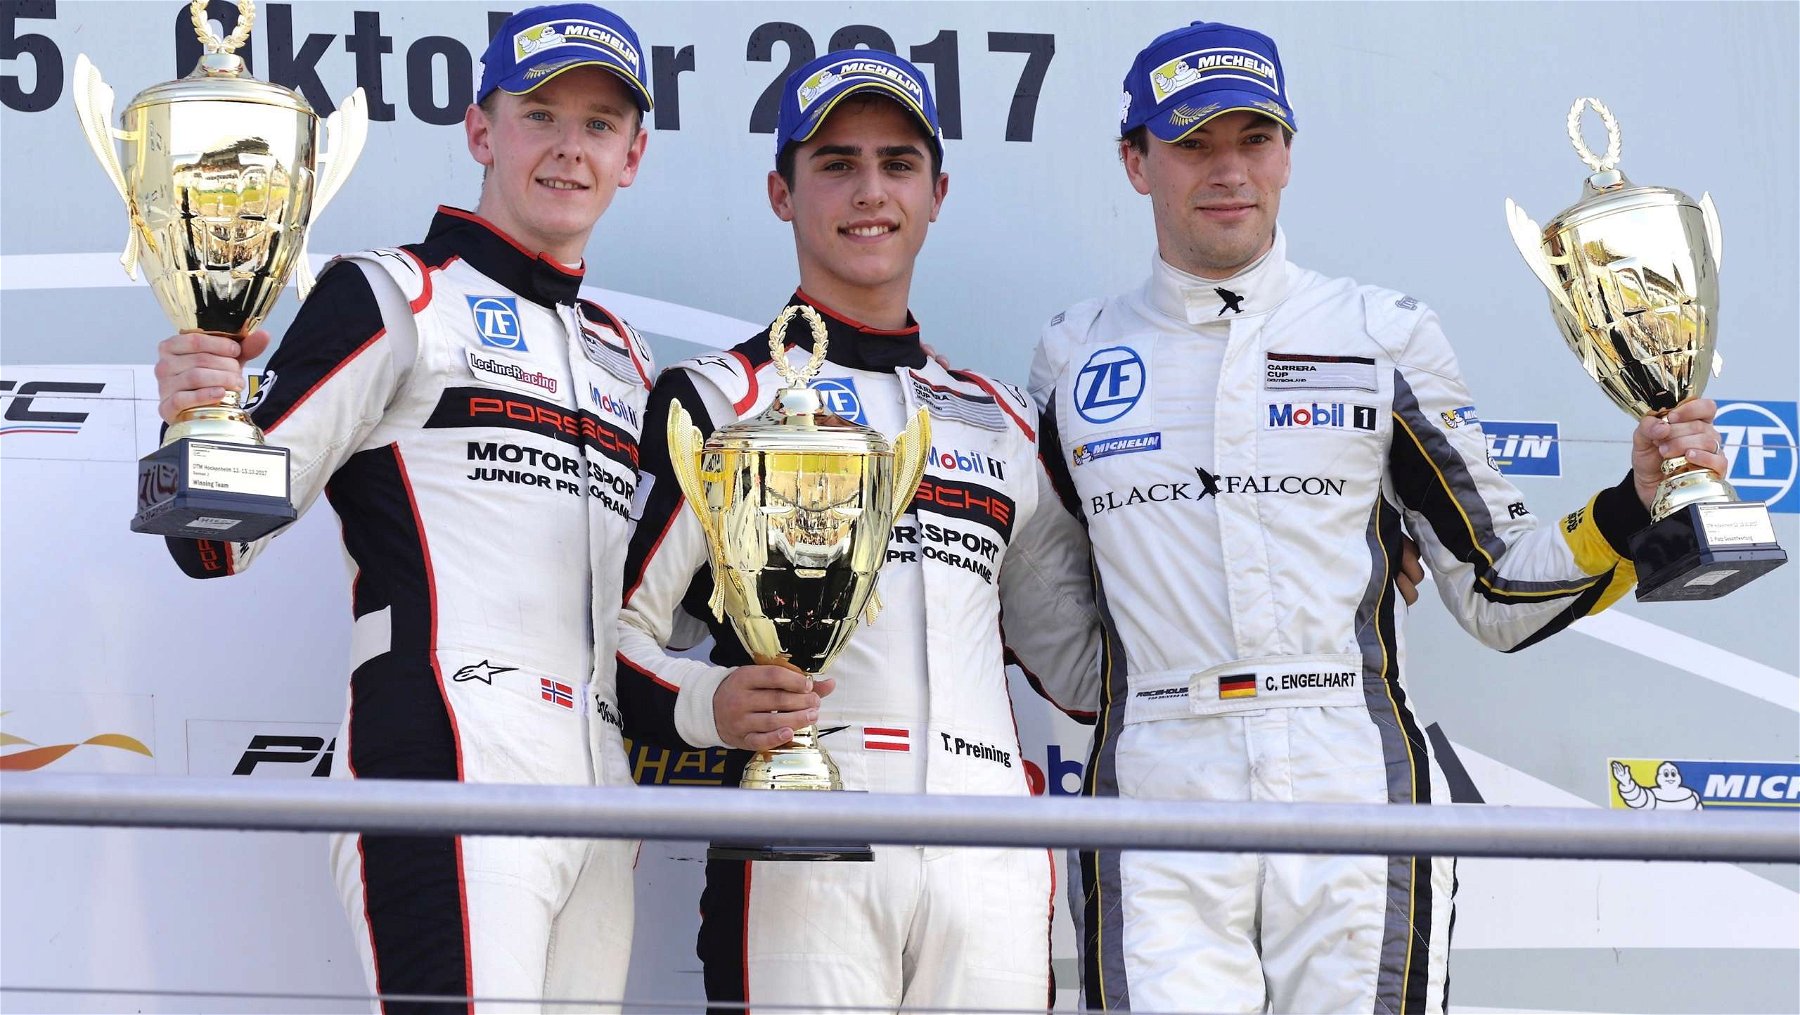 Porsche factory driver Thomas Preining wins a Porsche Carrera Cup race at Hockenheim in 2017